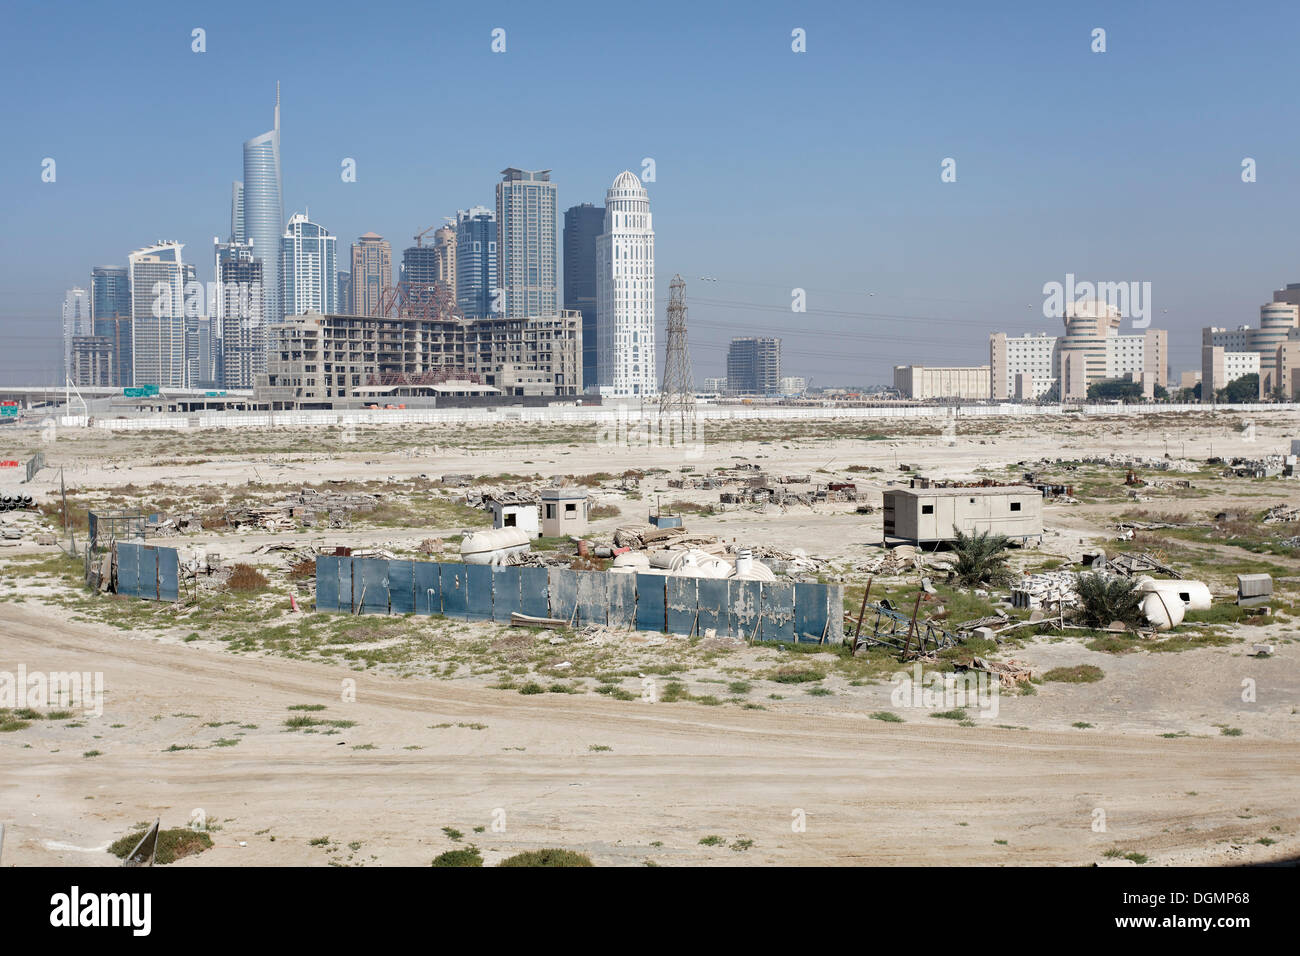 Barren land with high-rise buildings, urban development area, Nakheel Harbour, Dubai, United Arab Emirates, Middle East, Asia Stock Photo